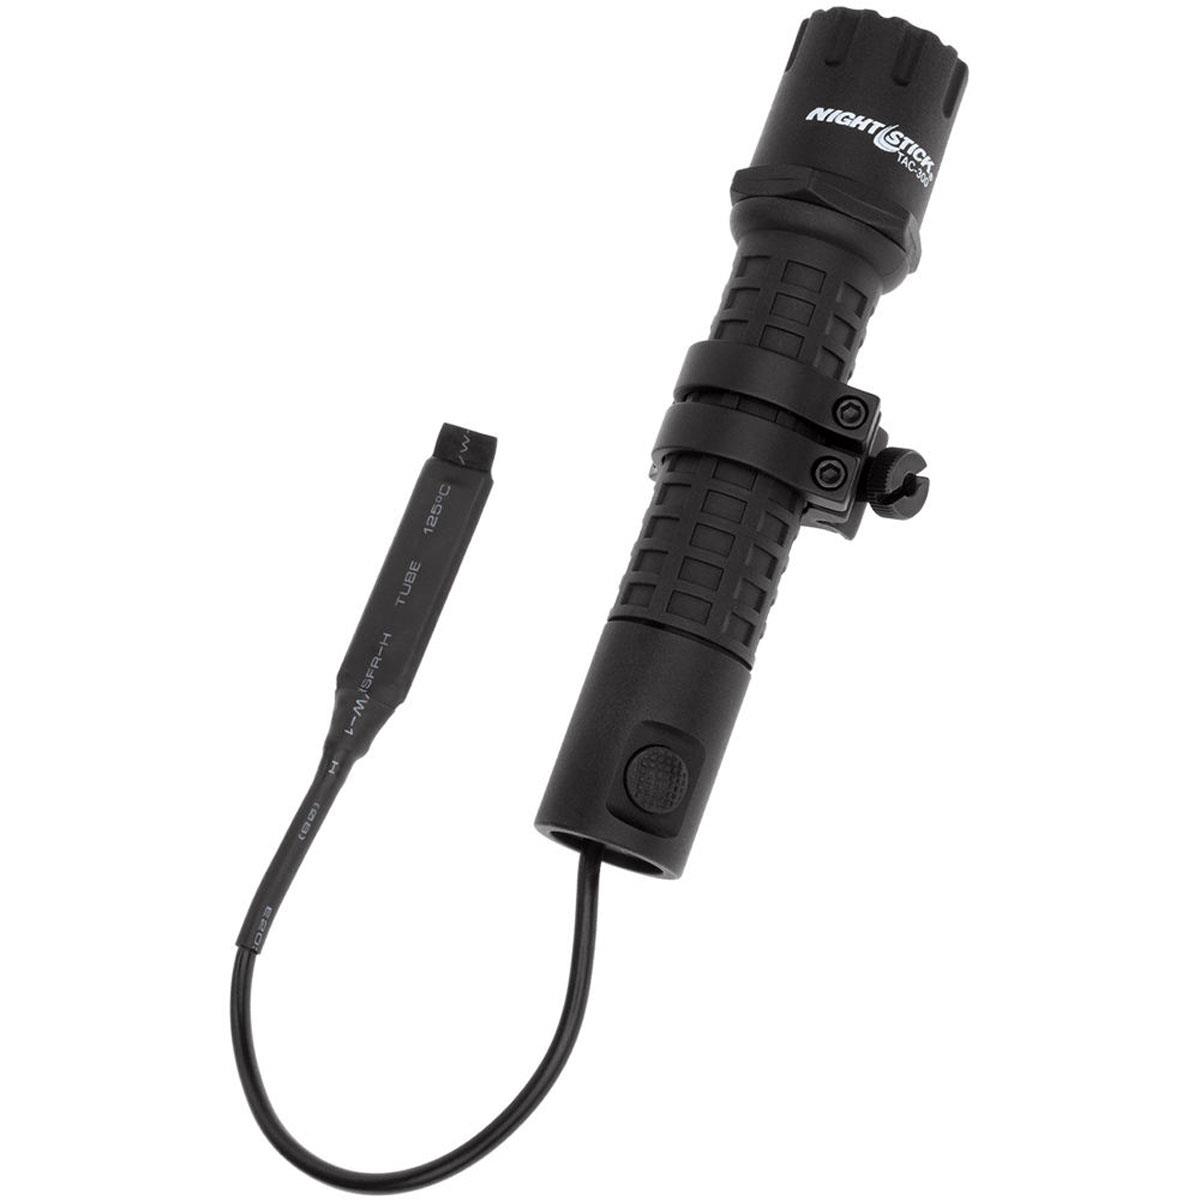 Polymer Tactical Flashlight with Long Gun Mount Kit - Nightstick TAC-300B-K01